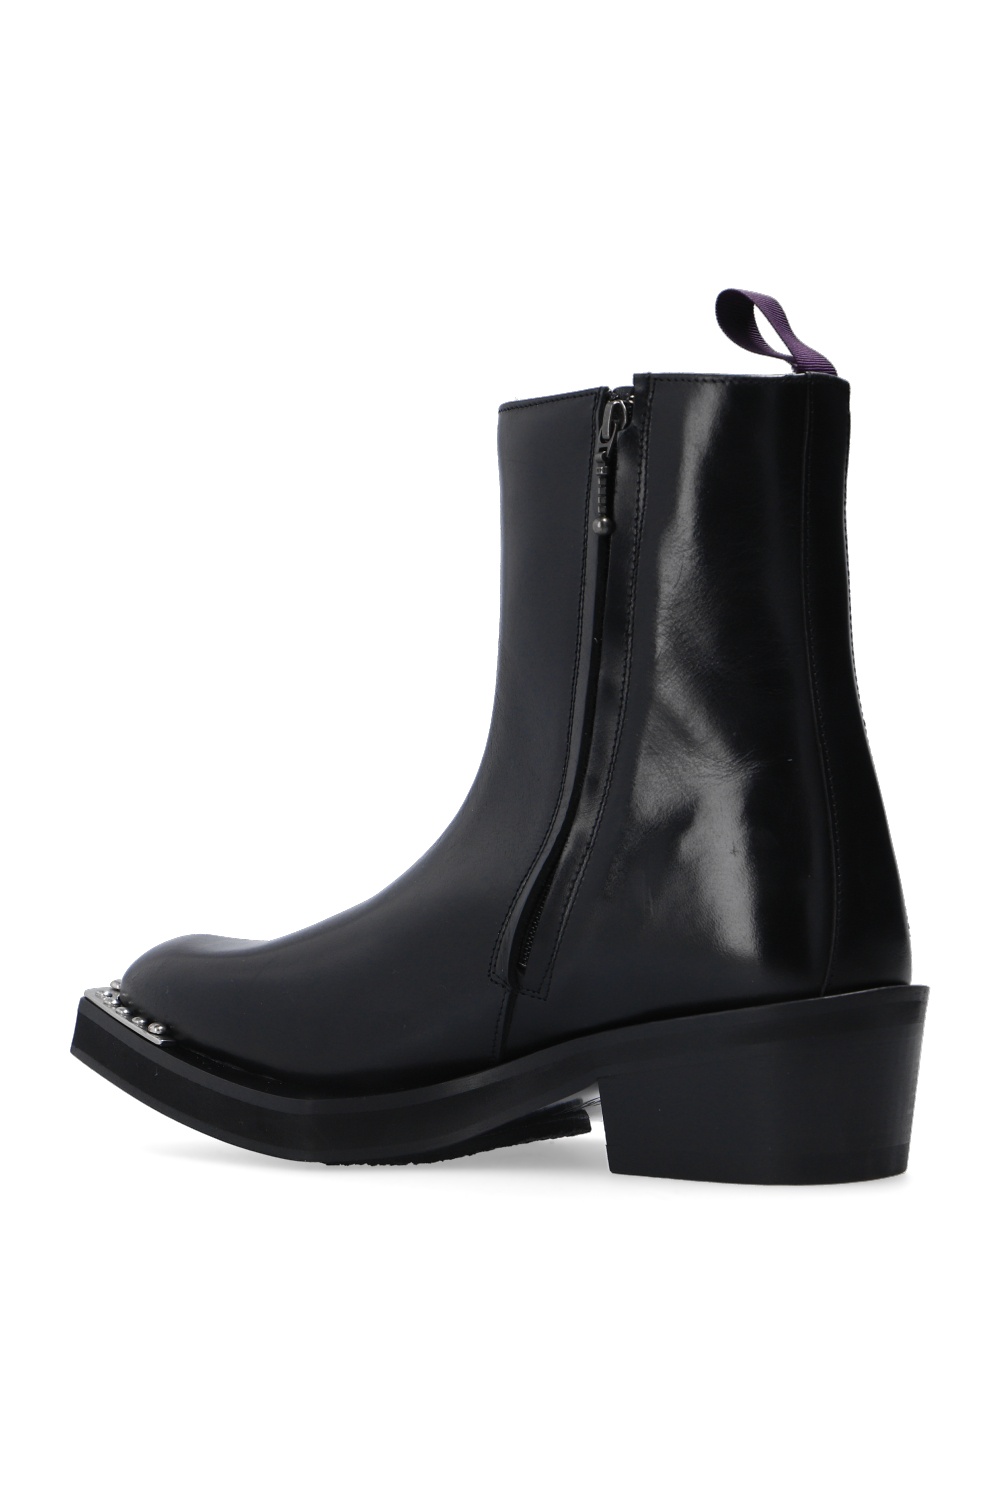 Black 'Romeo Hi' leather ankle boots Eytys - Vitkac Canada